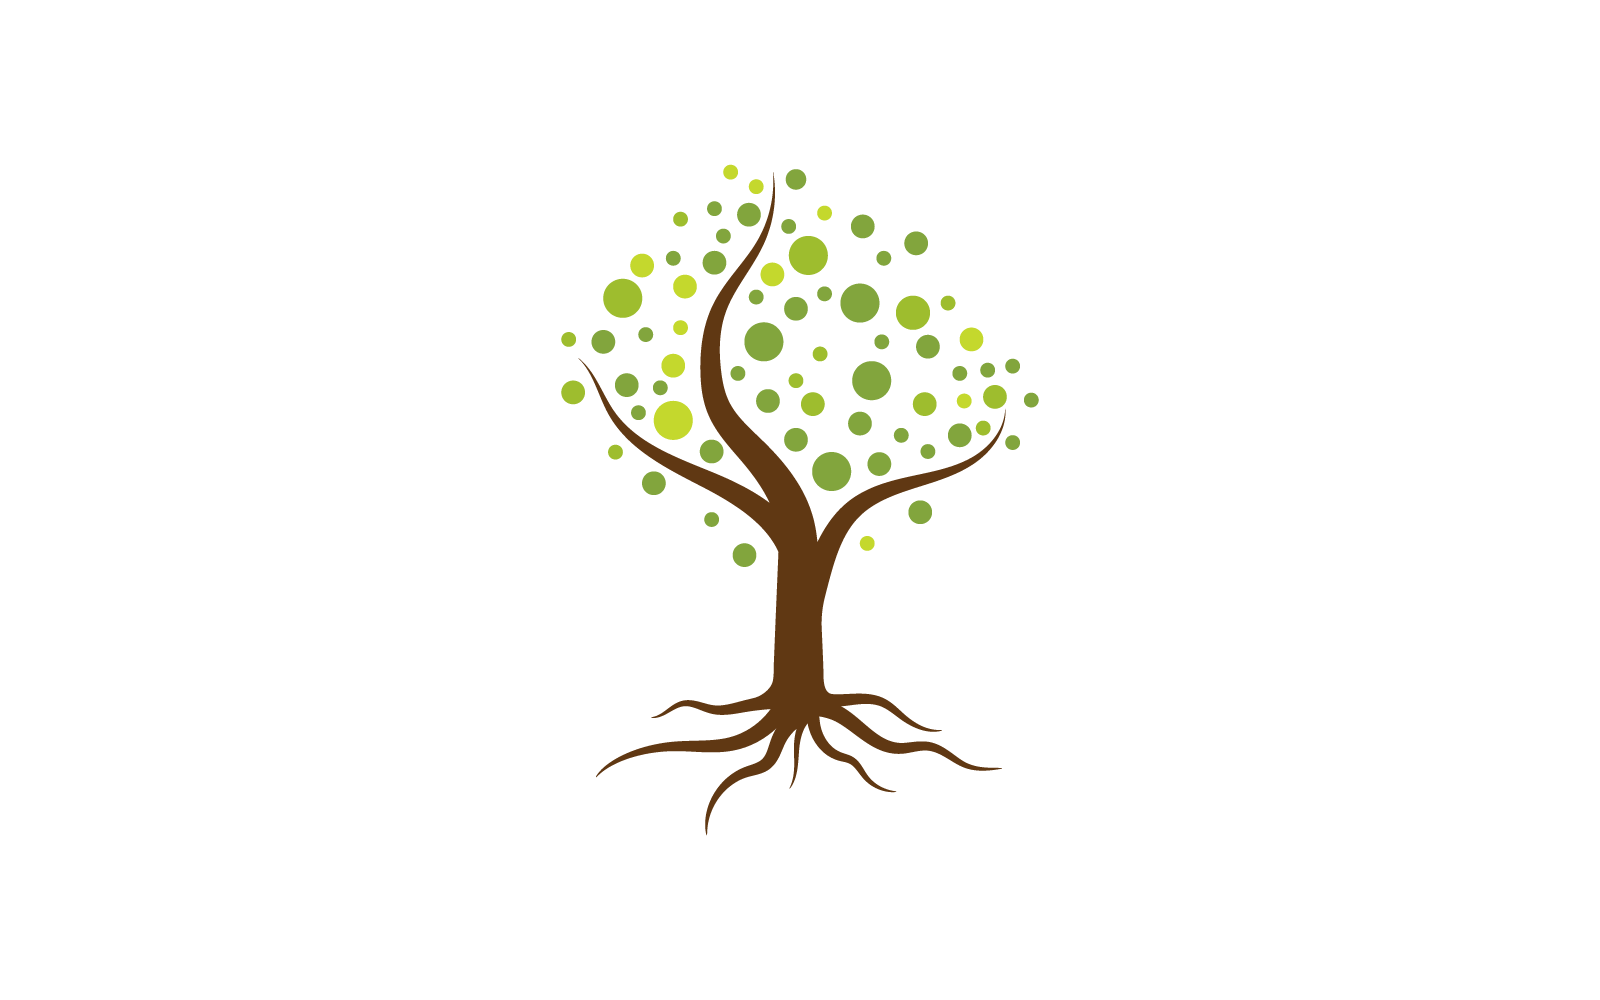 Tree nature design logo illustration template